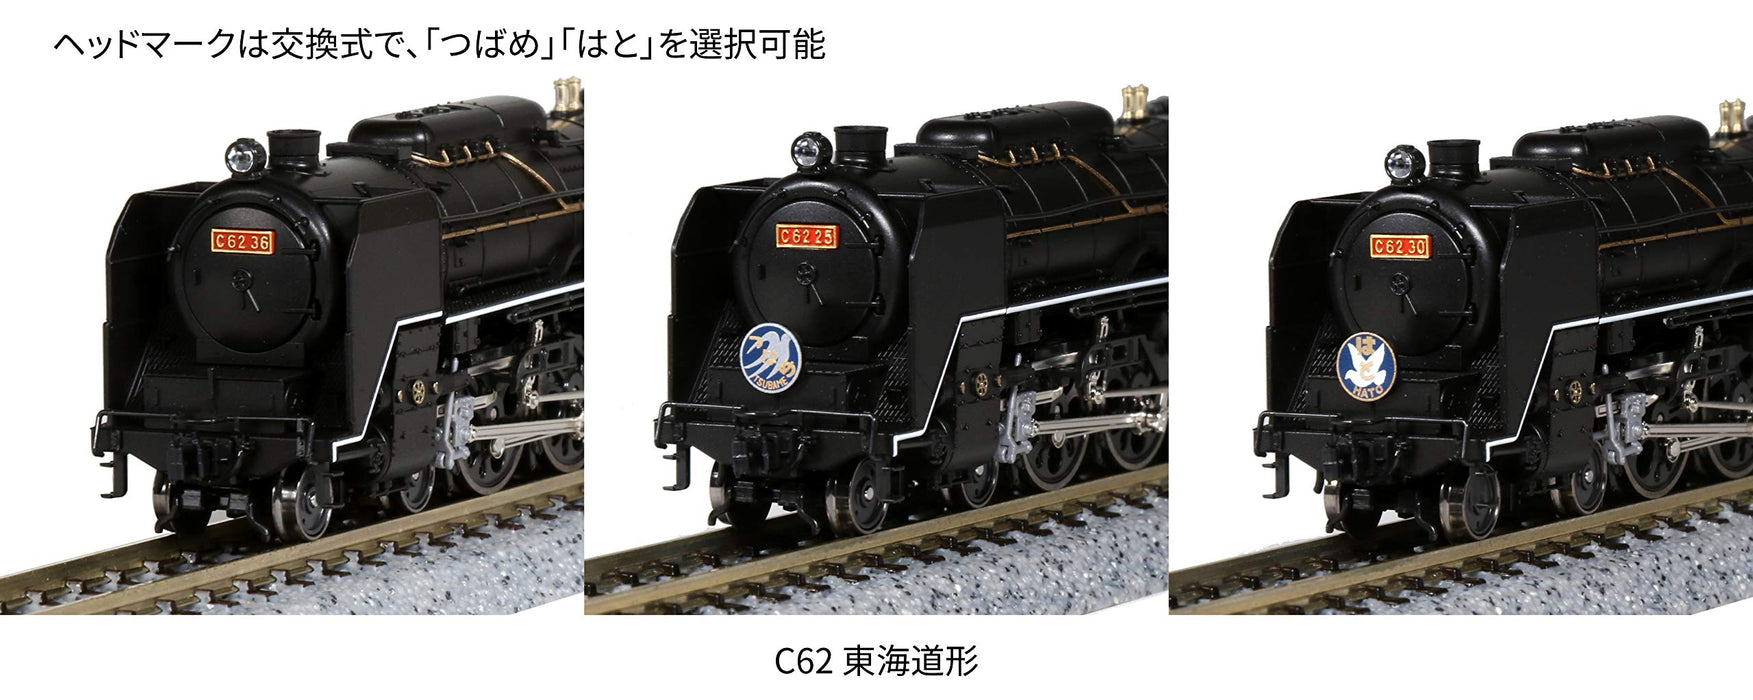 Kato N Gauge C62 Tokaido Type 2017-7 Locomotive Model